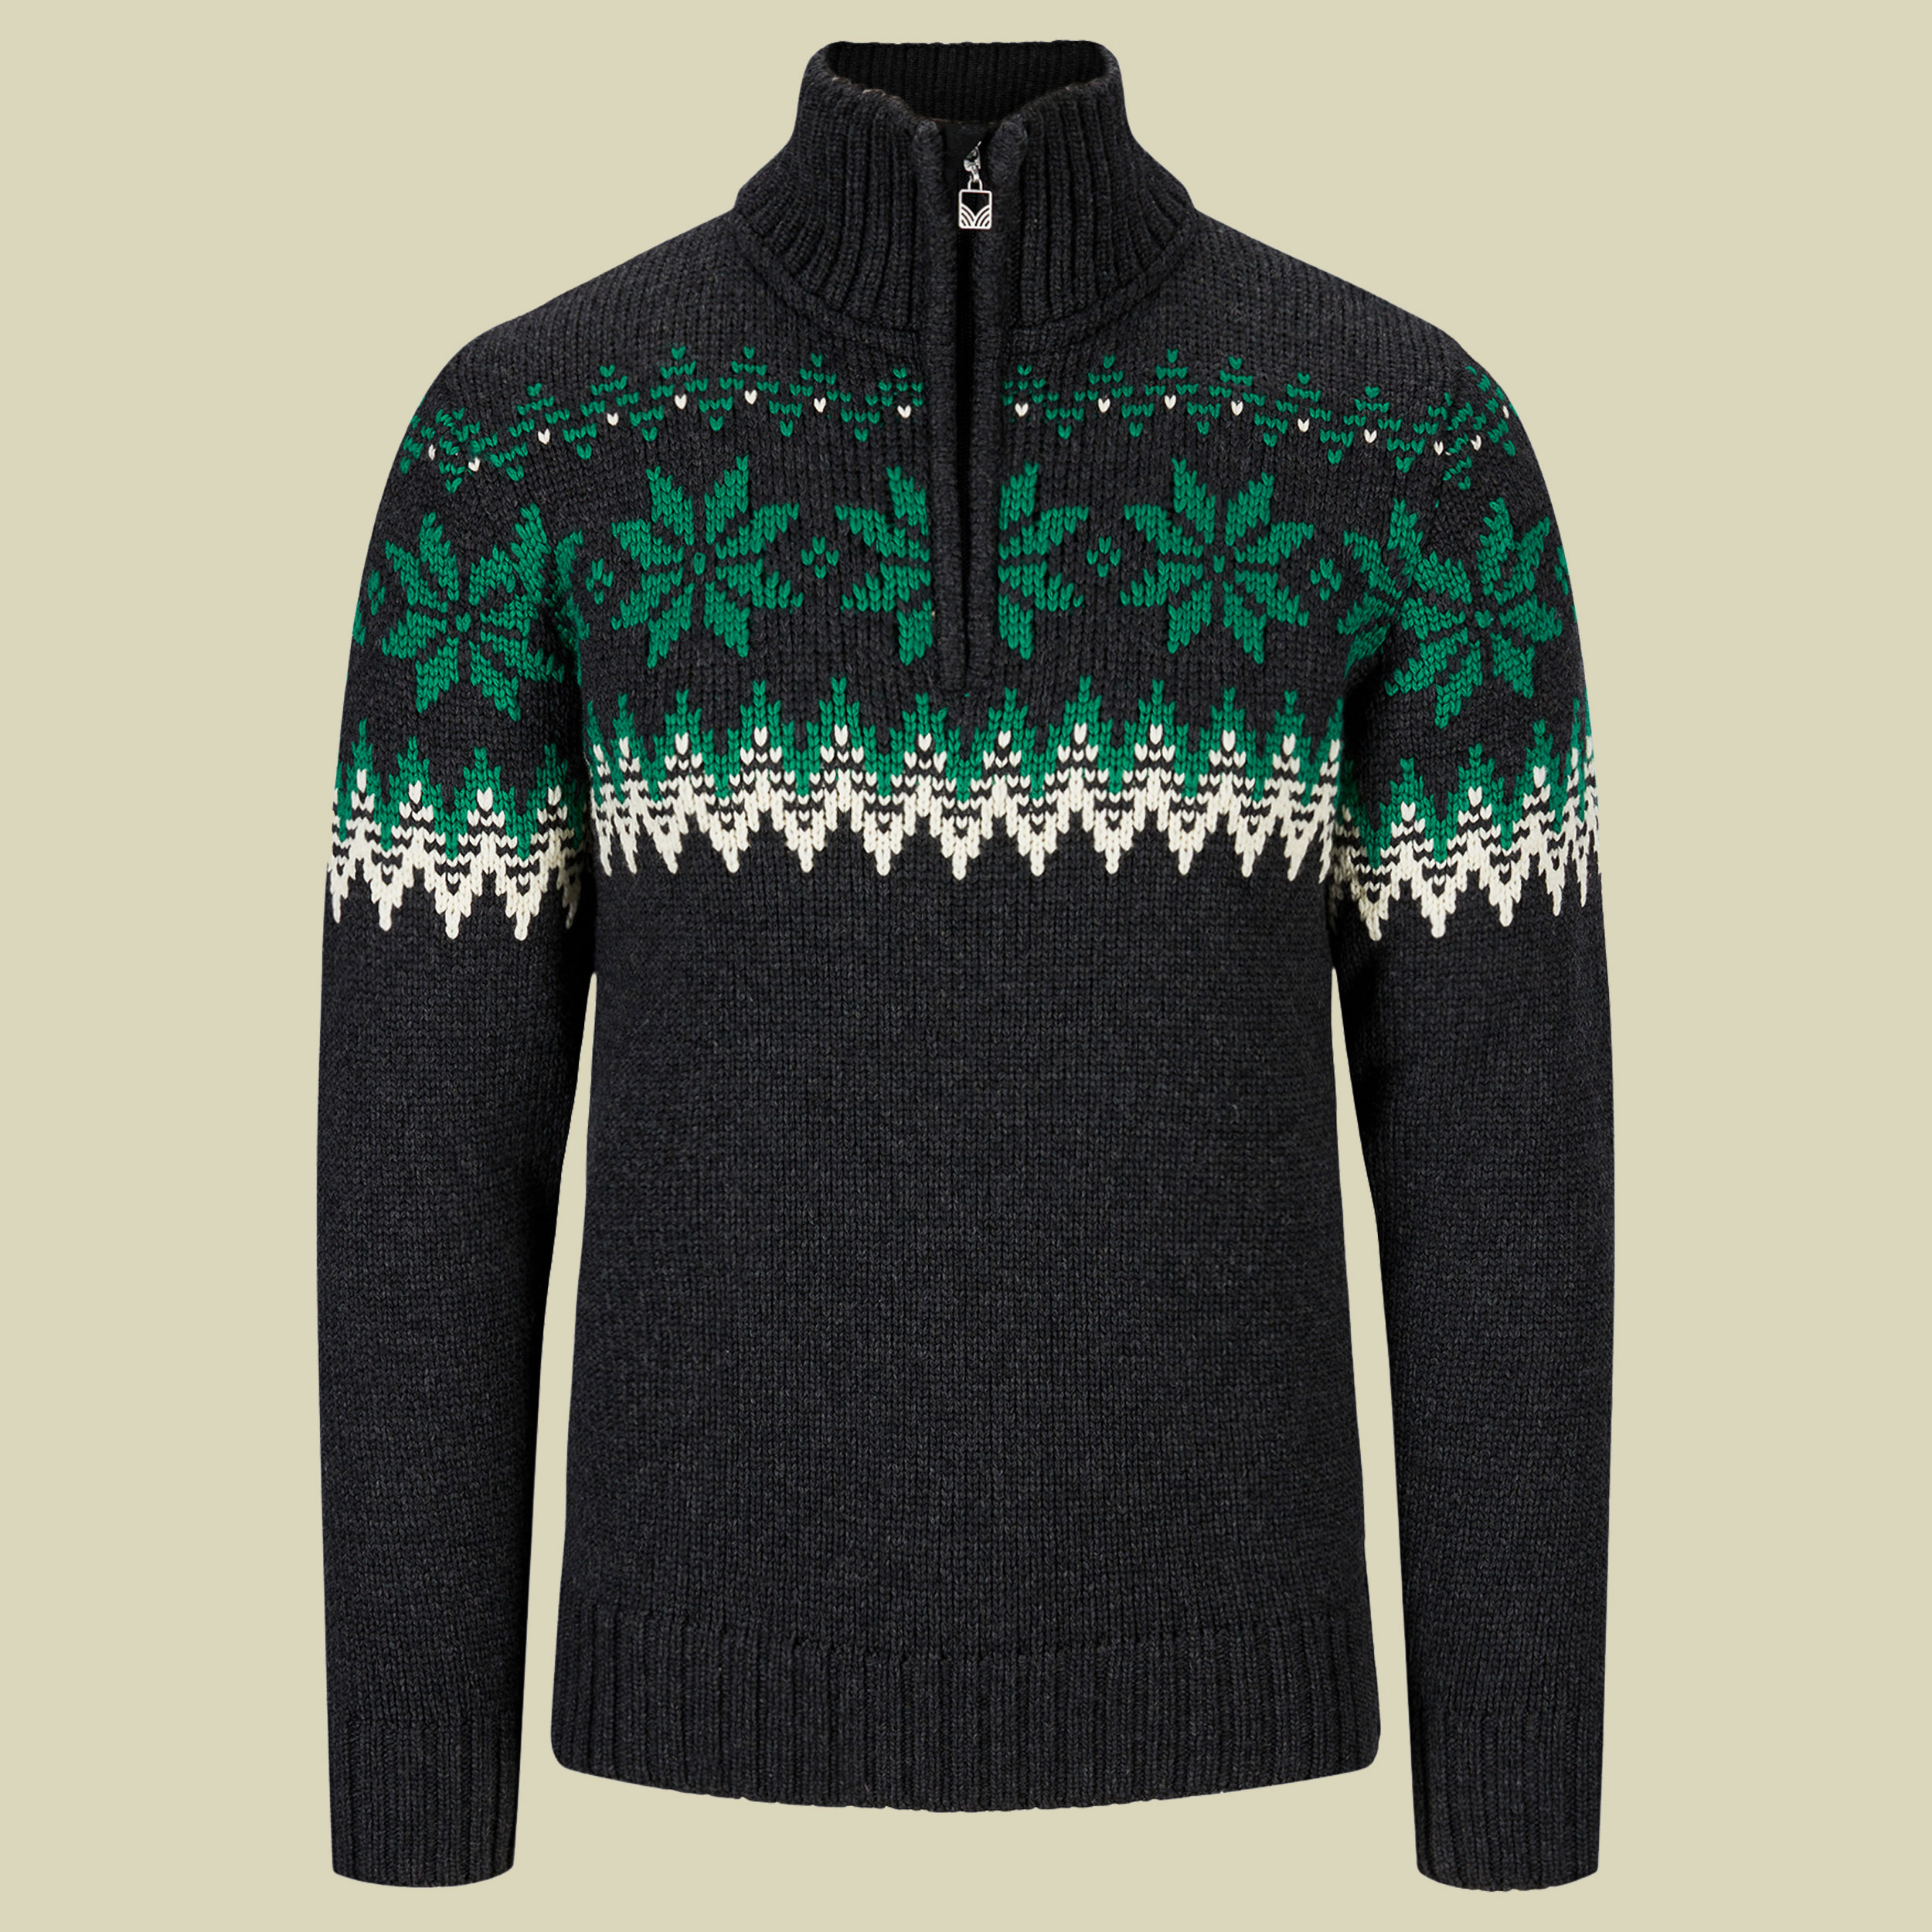 Myking Sweater Men Größe L  Farbe dark charcoal/bright green/off white